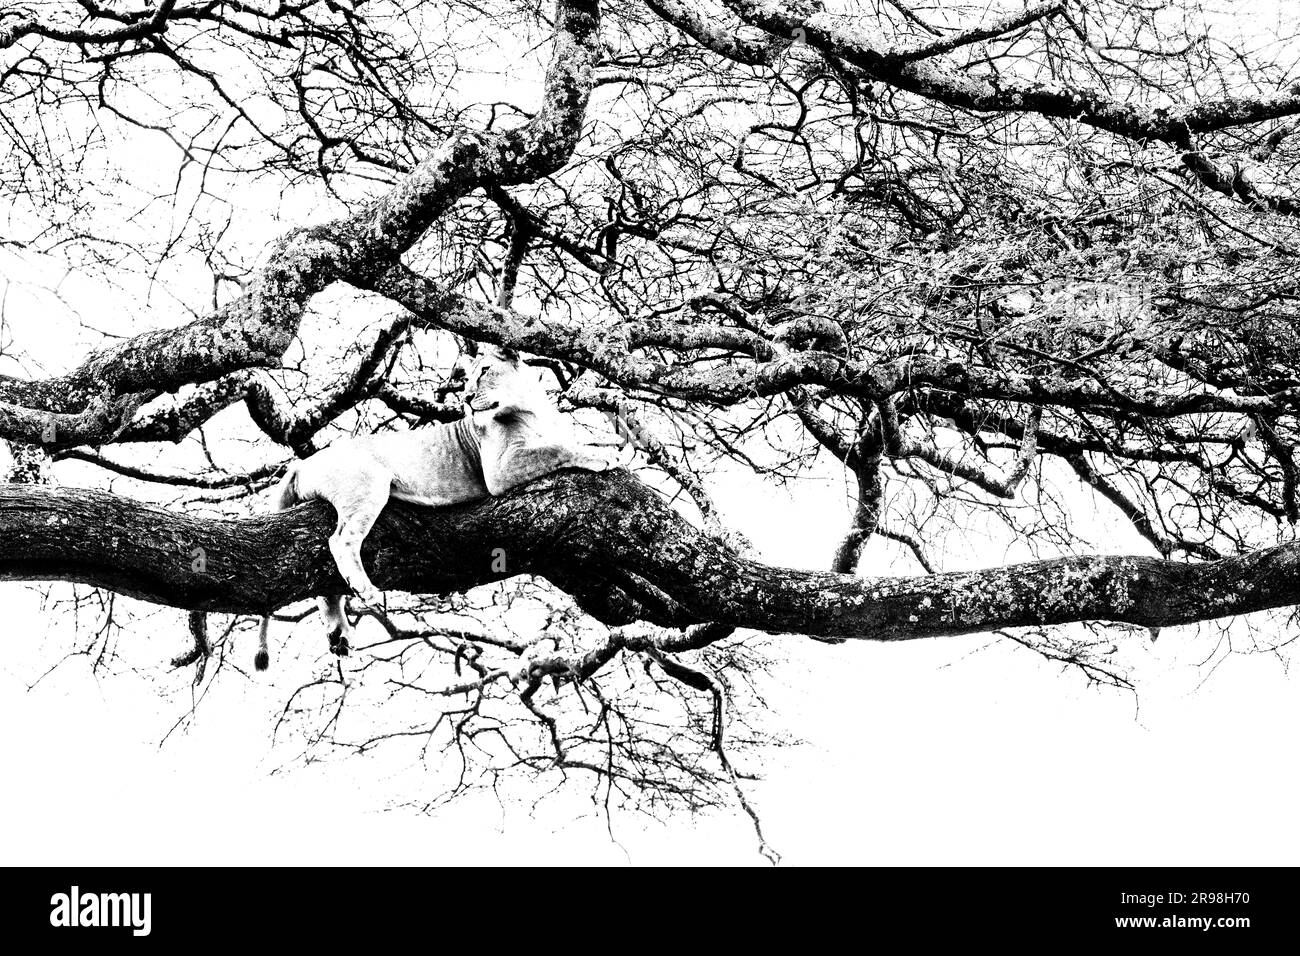 The image of Lioness on tree was taken in Ndutu, Tanzania. Stock Photo